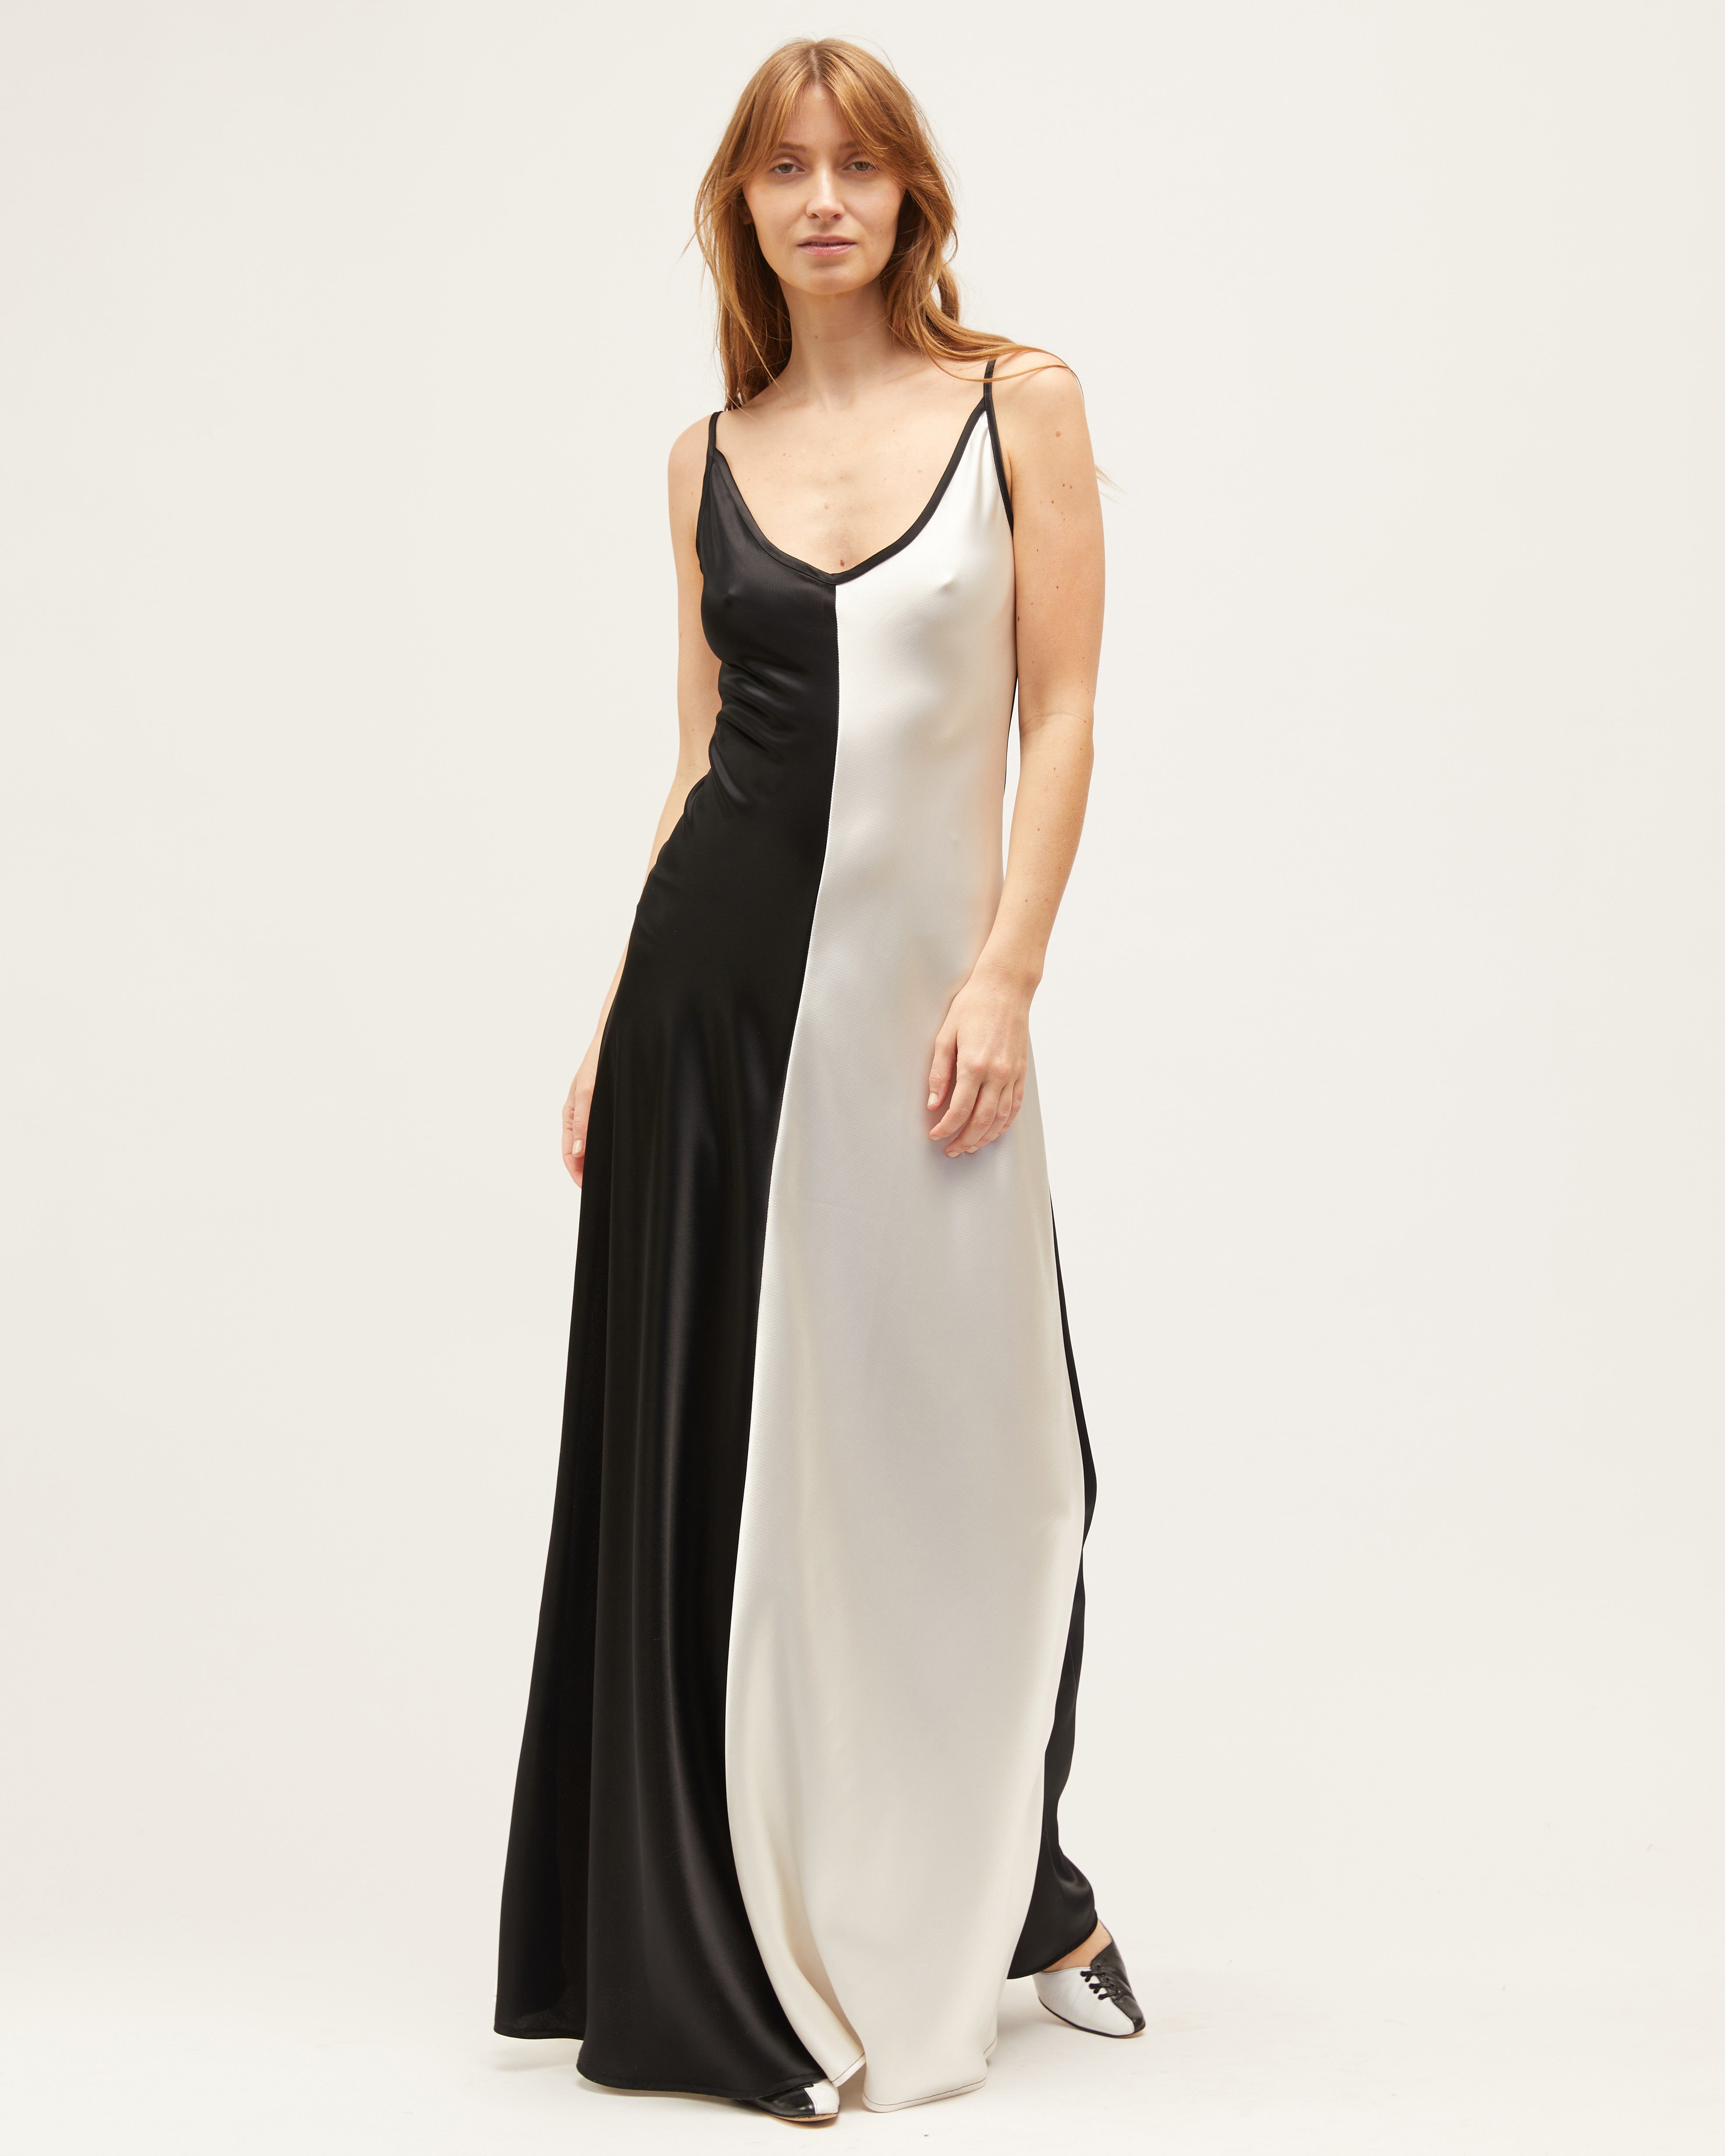 Sloane Dress | Black Oyster $490